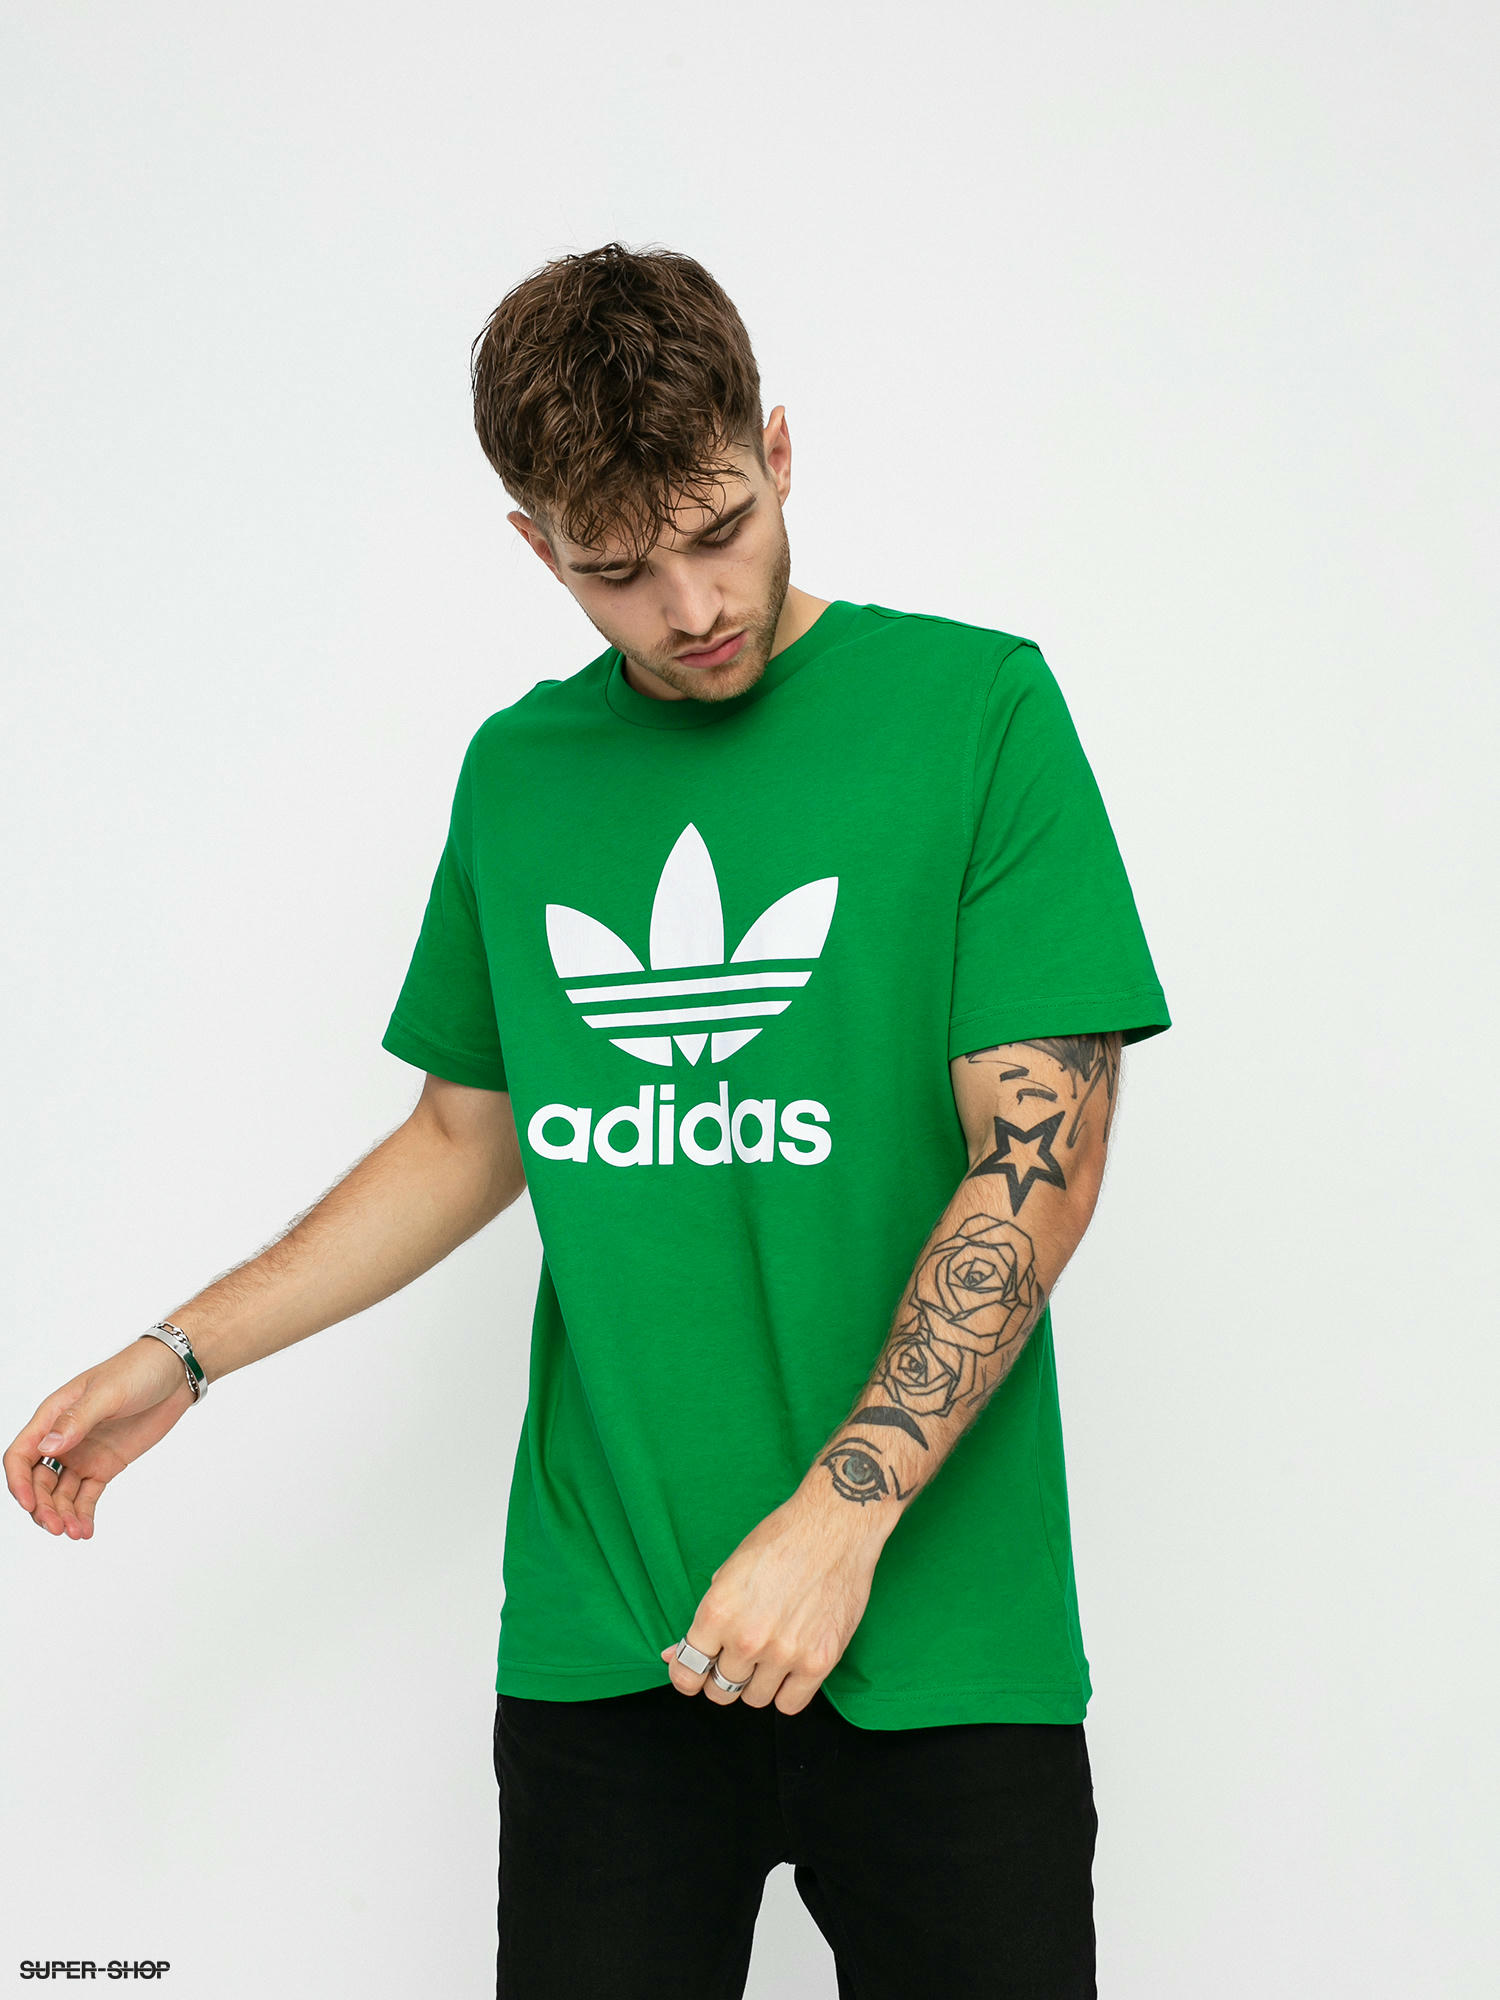 green and white adidas shirt